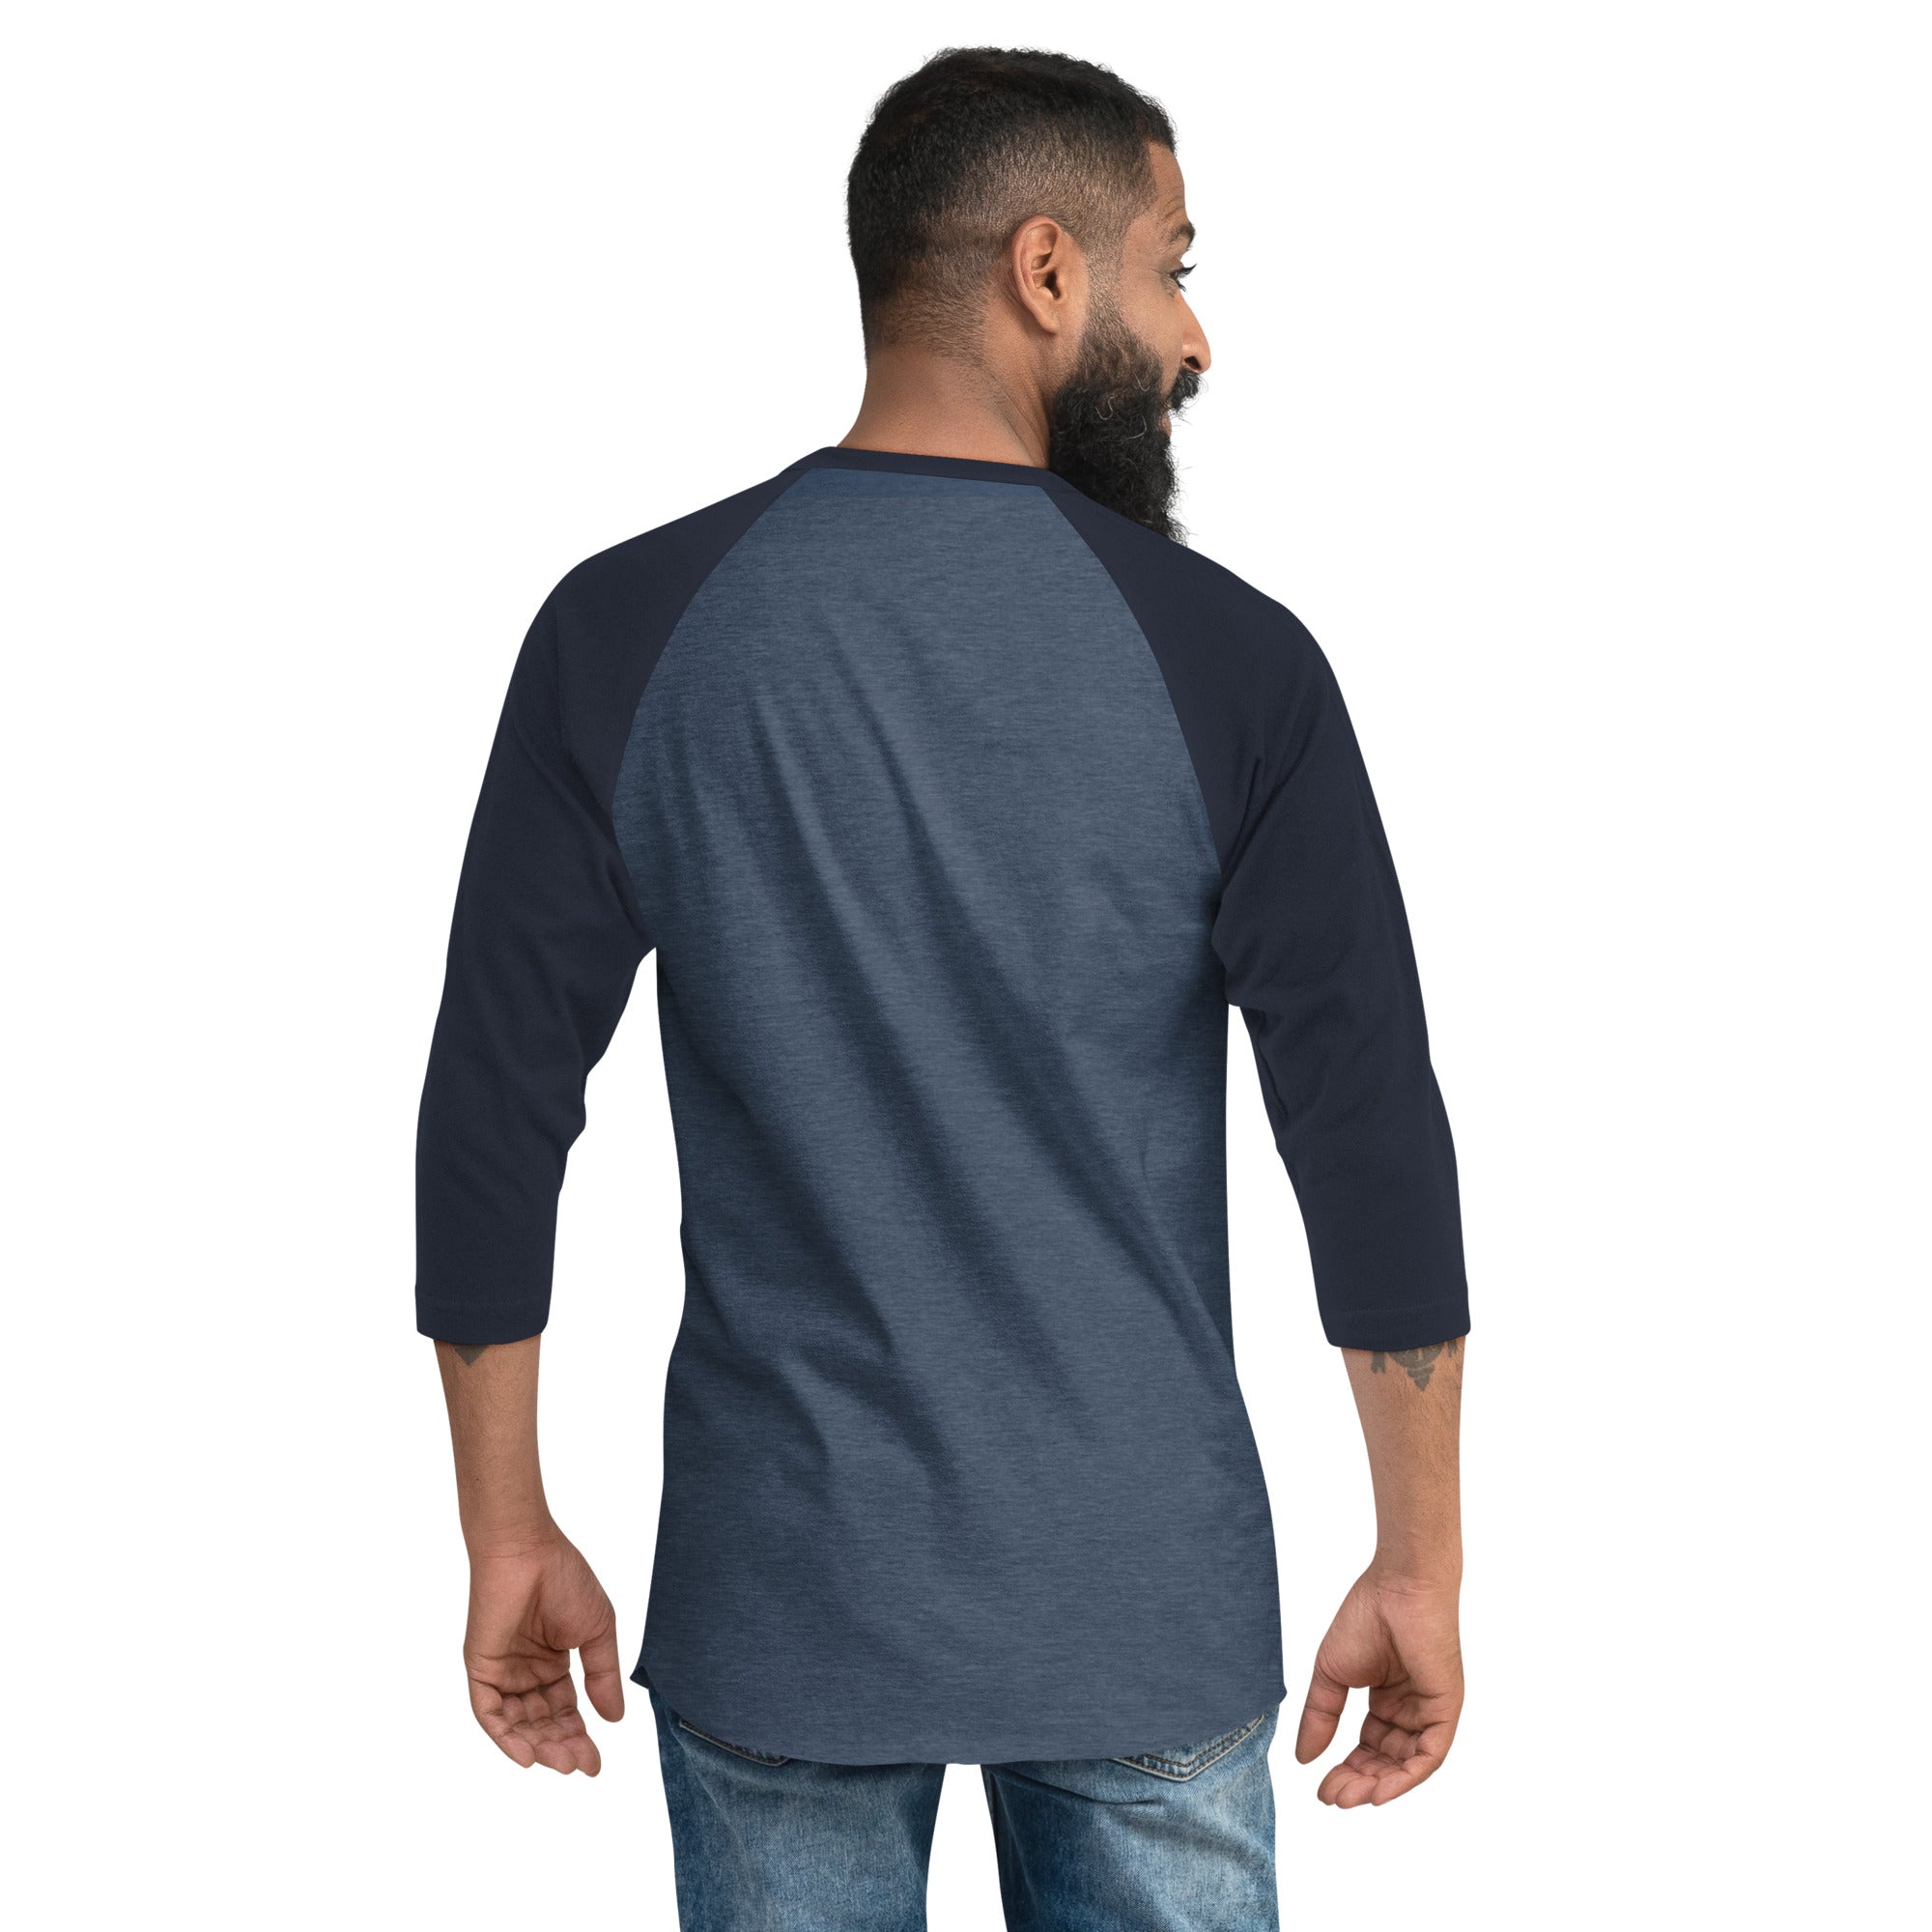 MTAT 3/4 sleeve T-Shirt